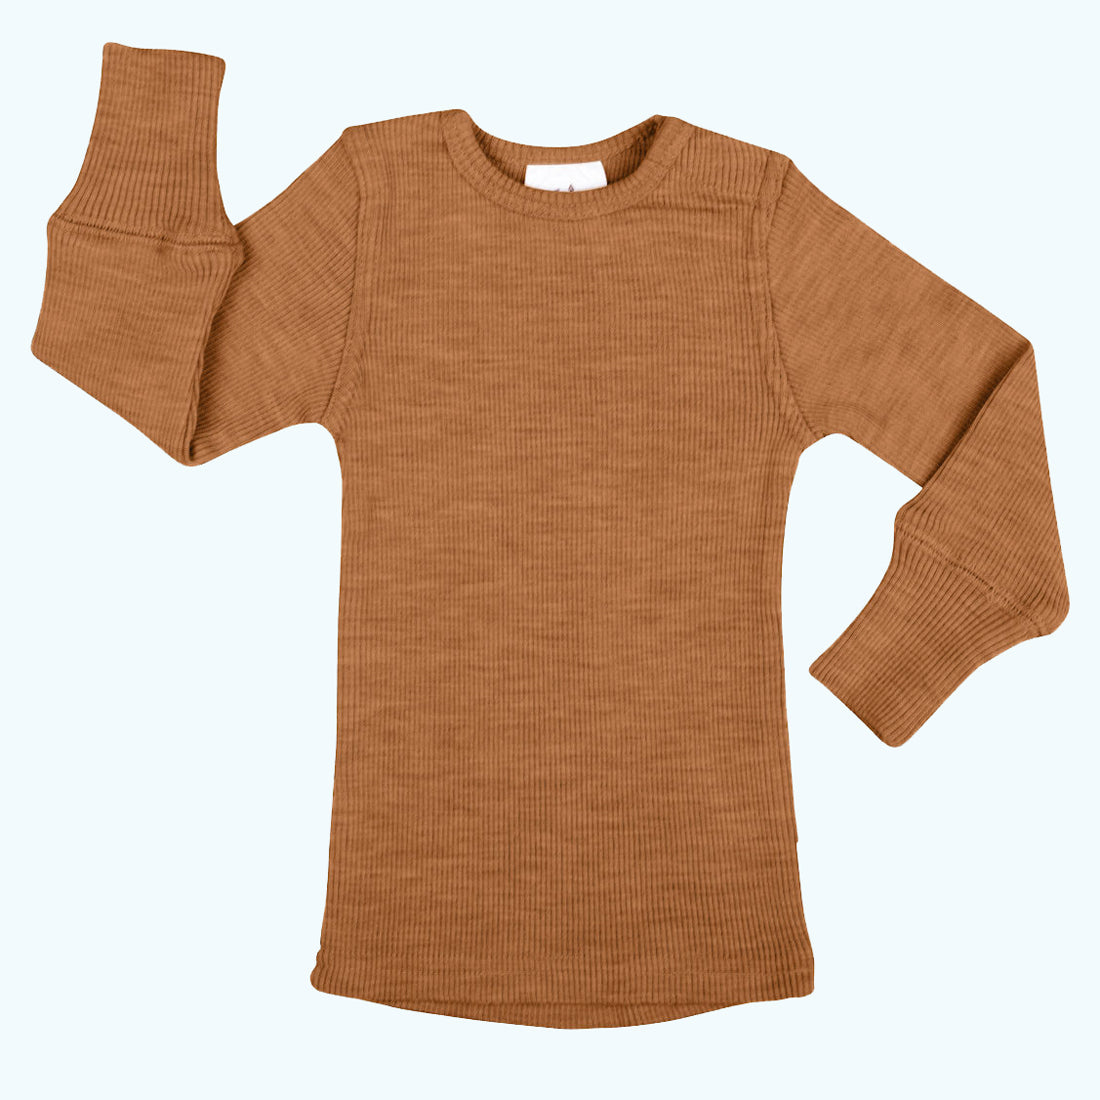 OUTLET ManyMonths® Merino Wool Kids Long Sleeve Shirt